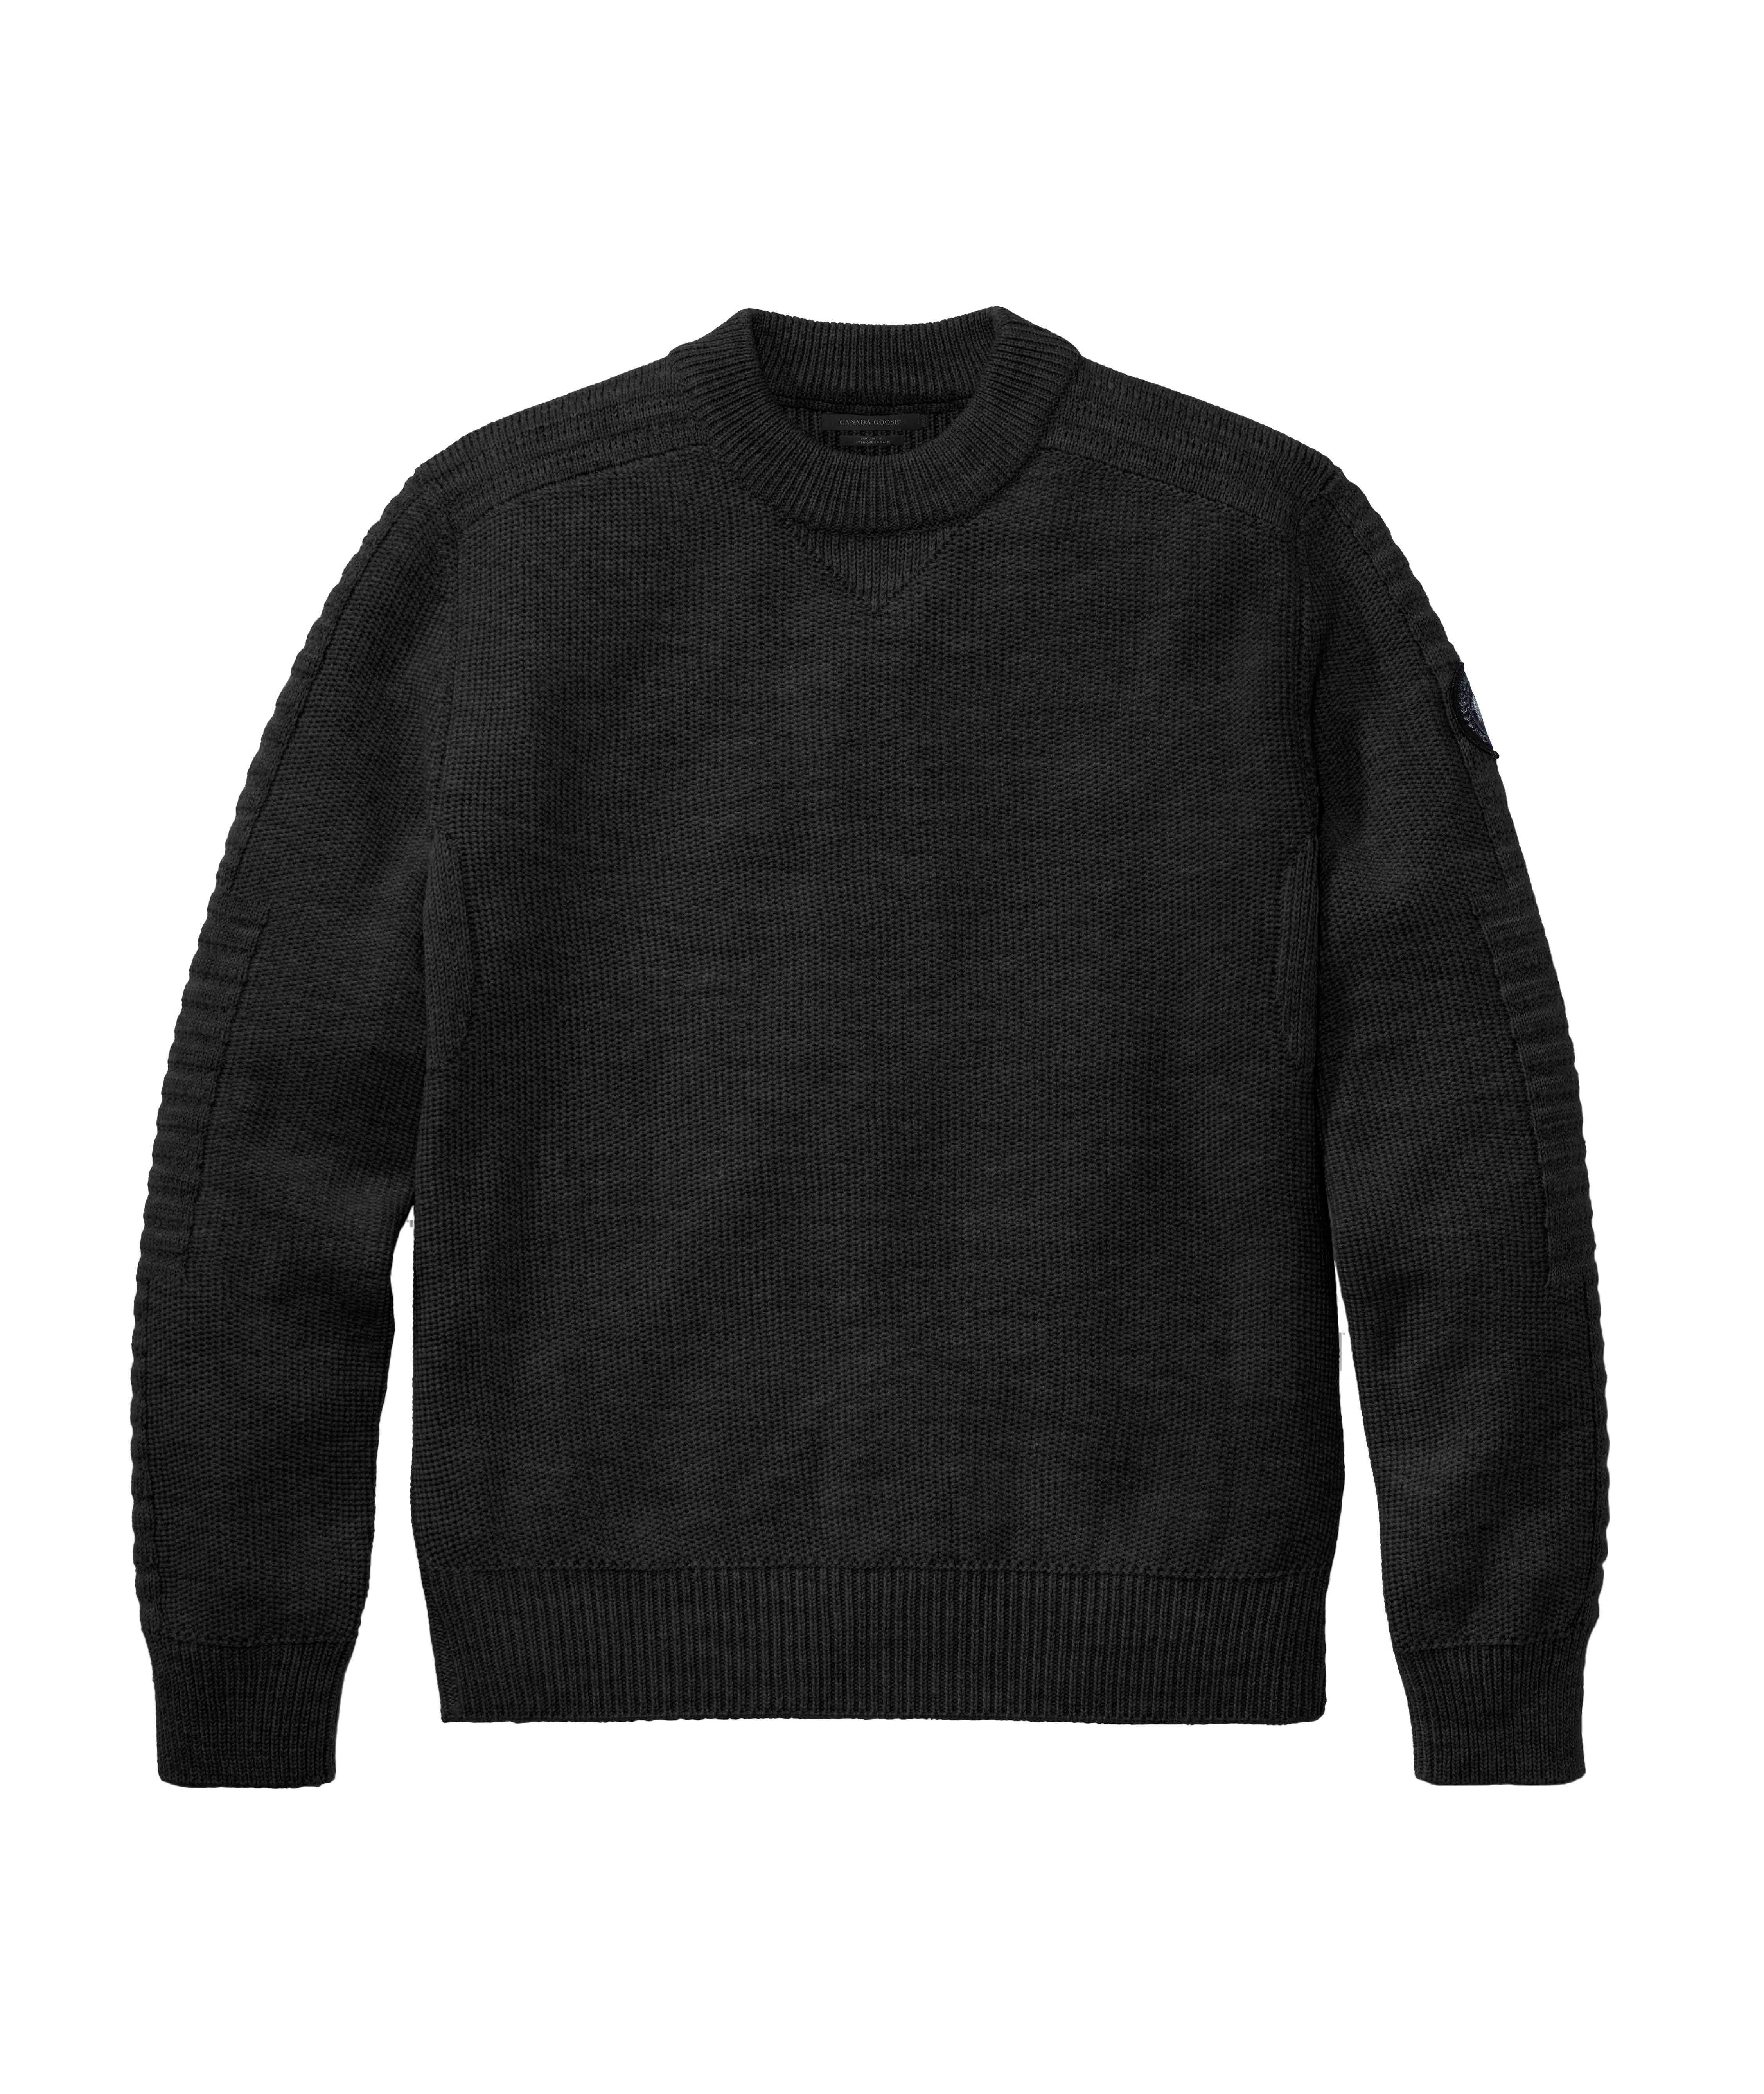 Paterson Merino Wool Sweater image 0